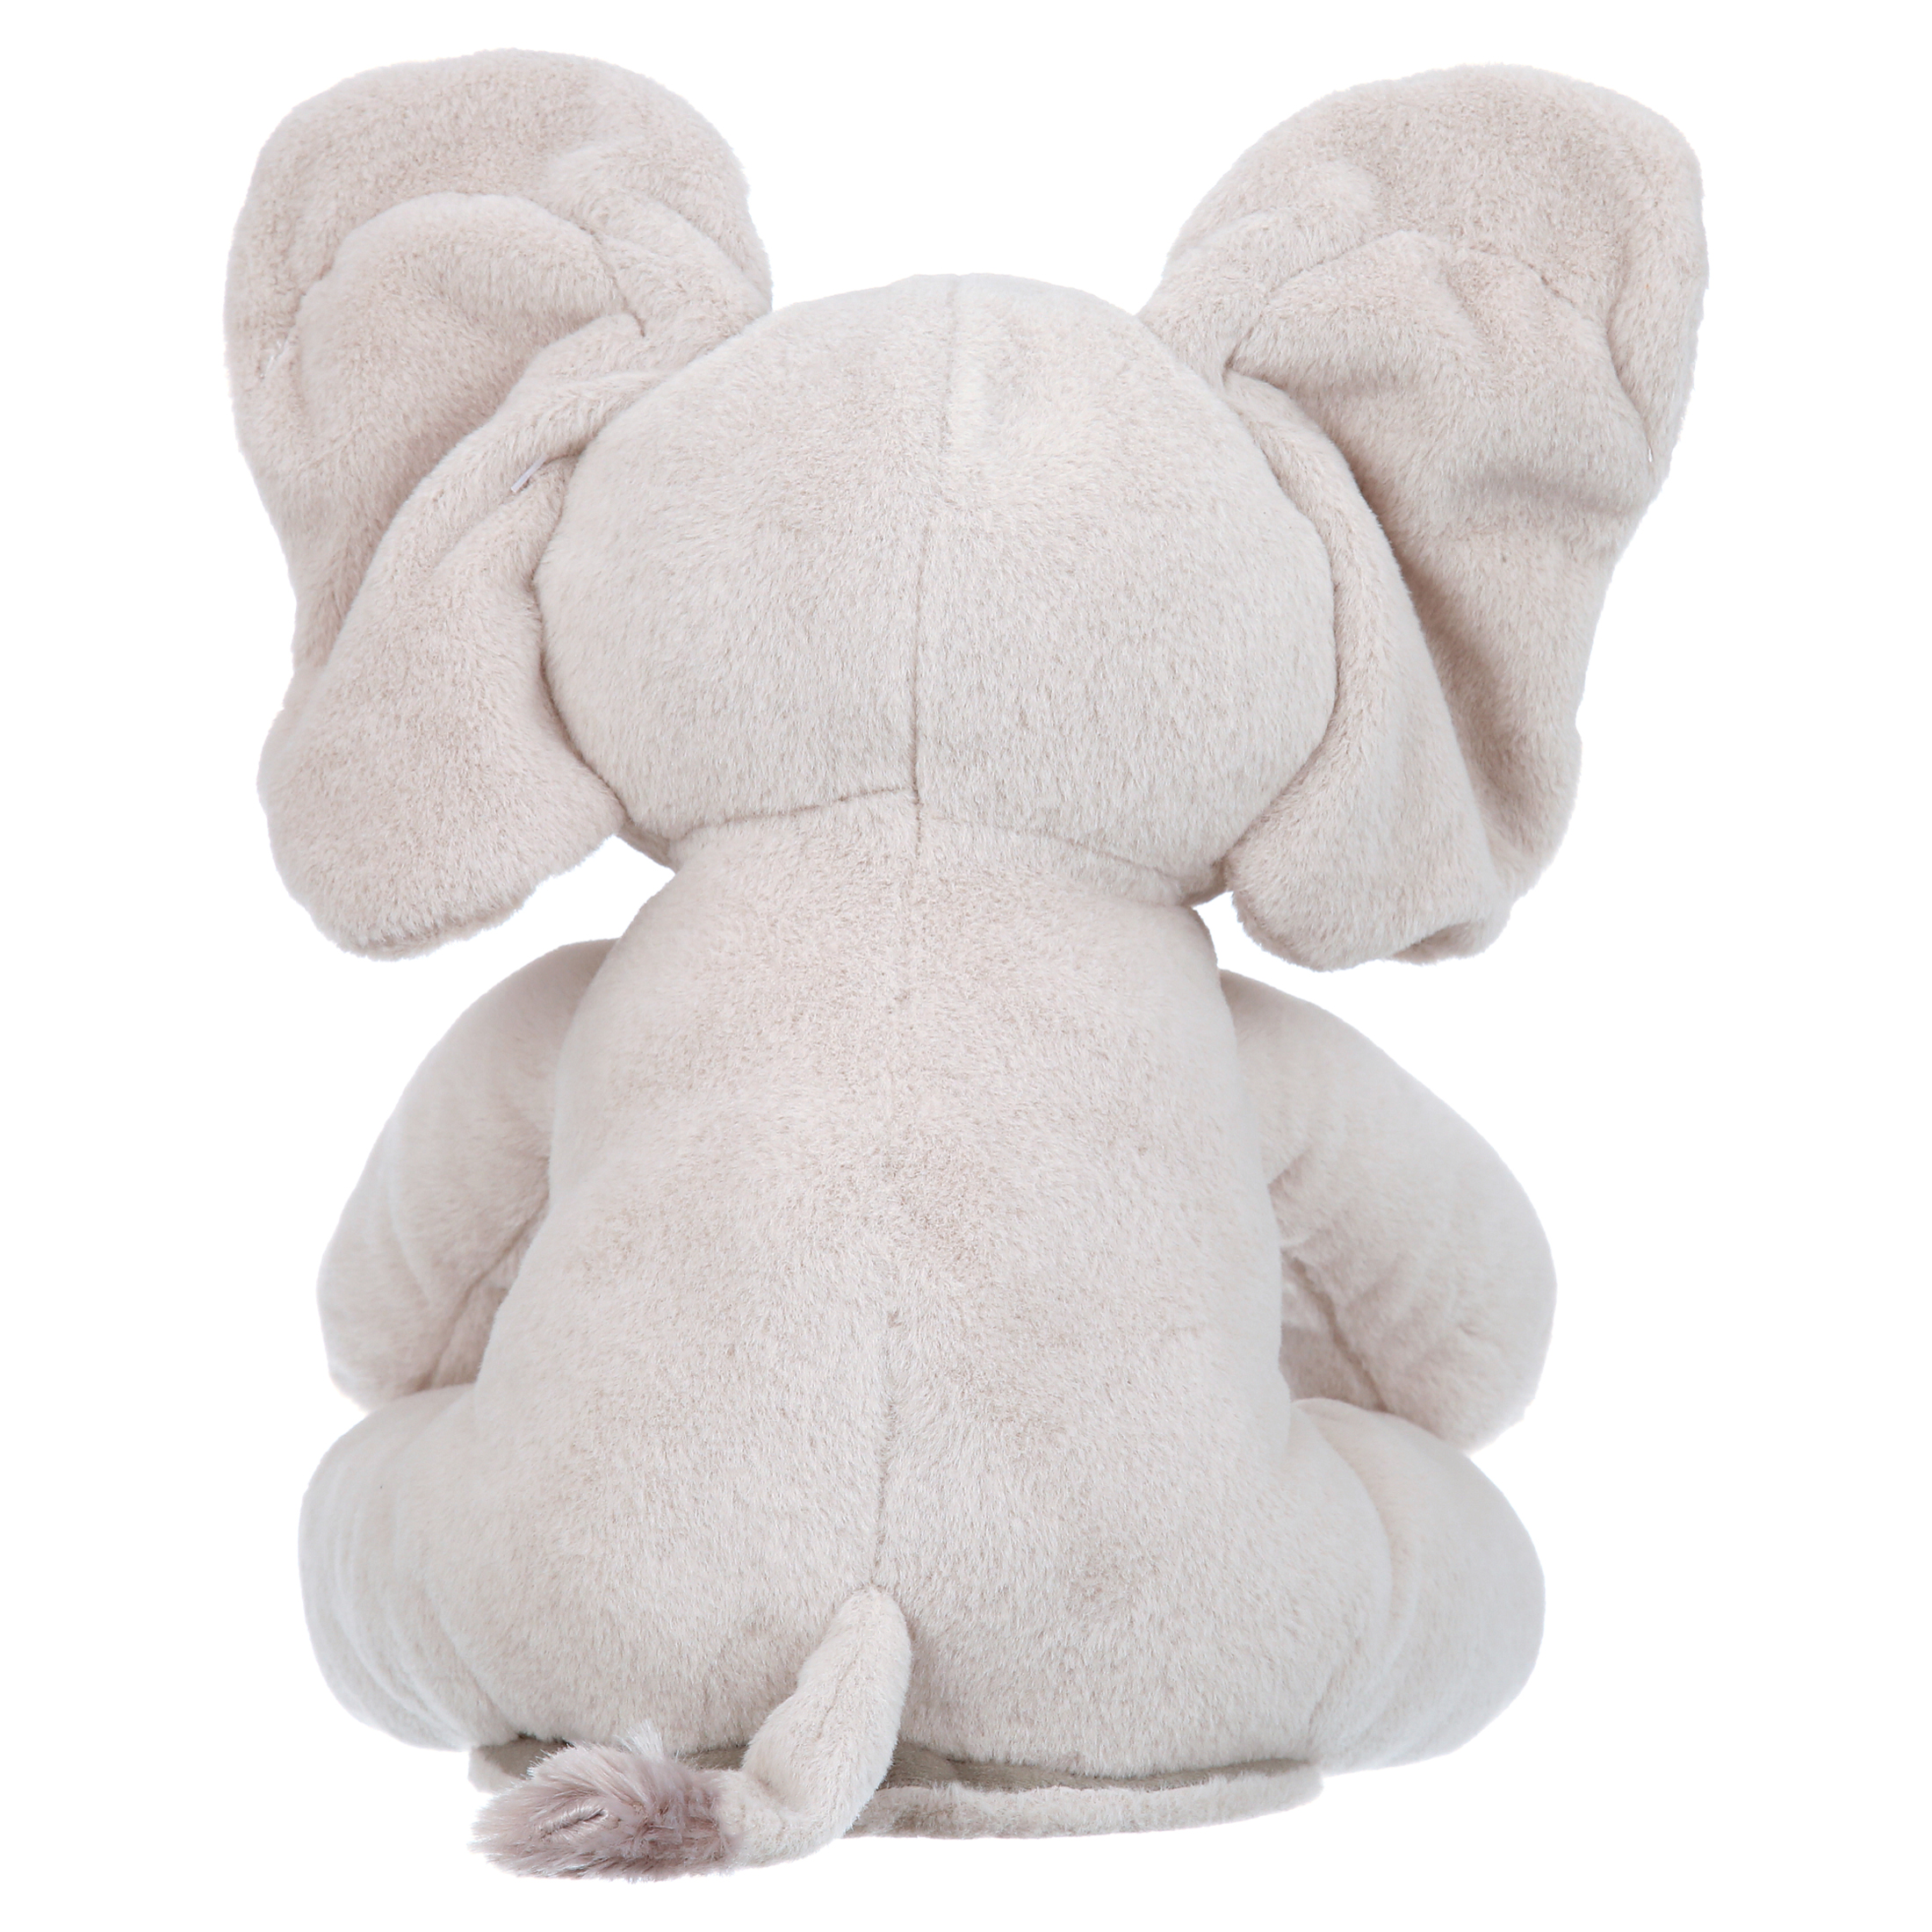 GUND Baby Animated Flappy The Elephant Stuffed Animal Plush, Gray, 12" - image 5 of 6